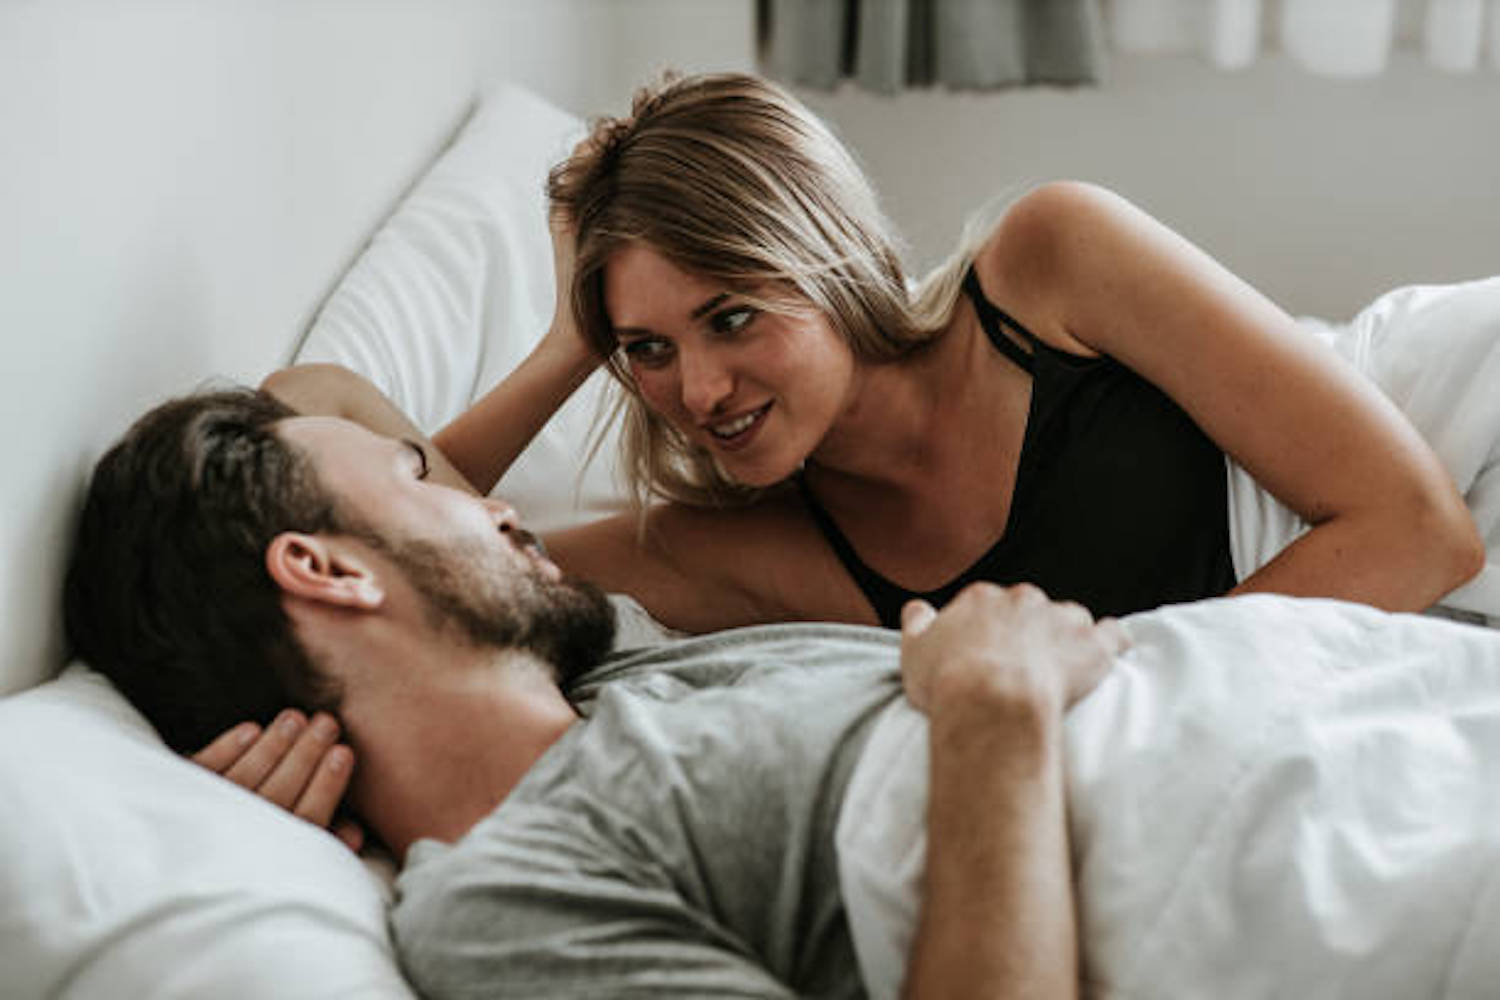 Couple - Relationship, Women, Human Sexual Behavior, Waking up, Wife, morning